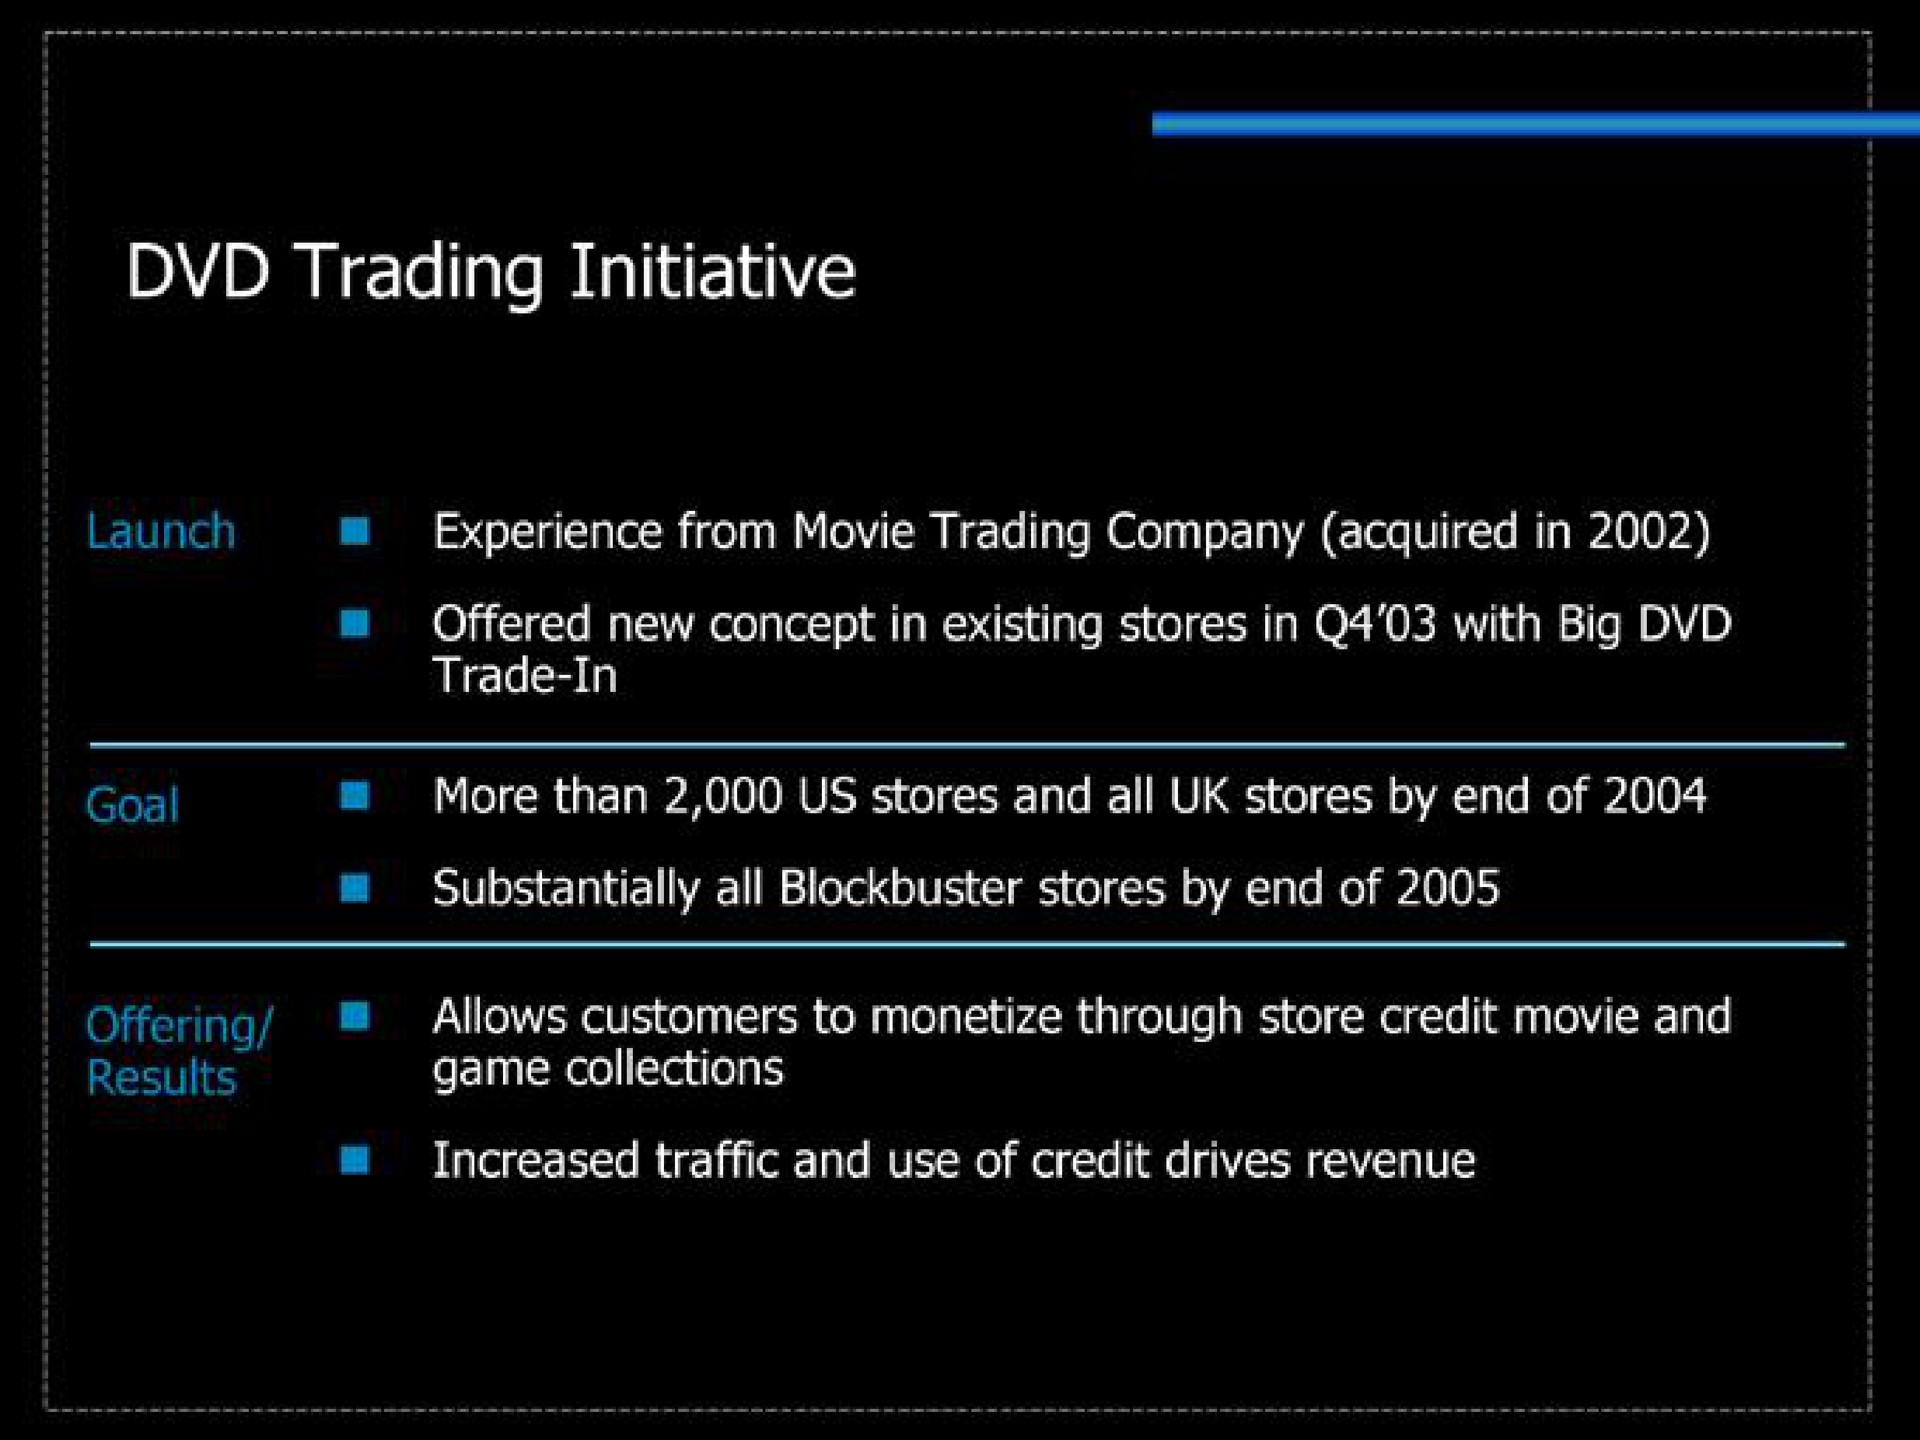 trading initiative | Blockbuster Video